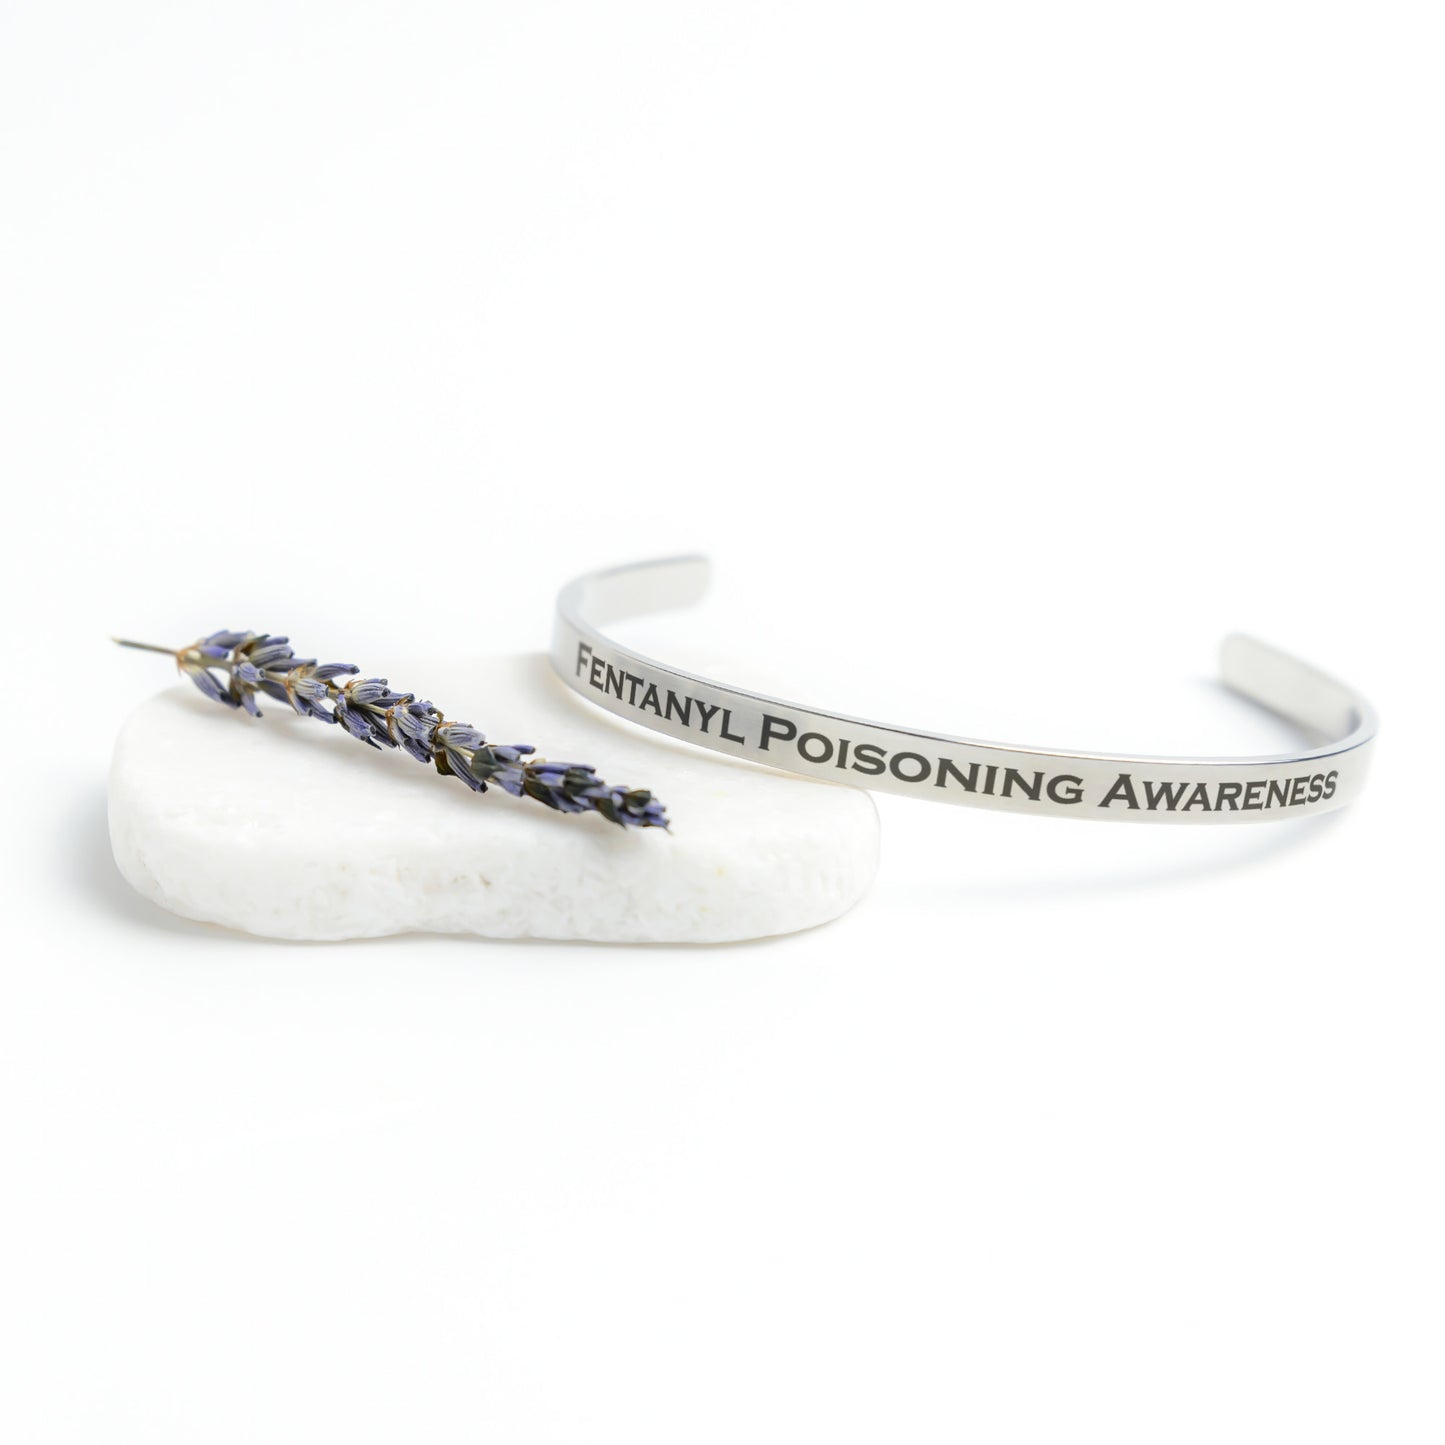 Personalized Fentanyl Poisoning Awareness Cuff Bracelet